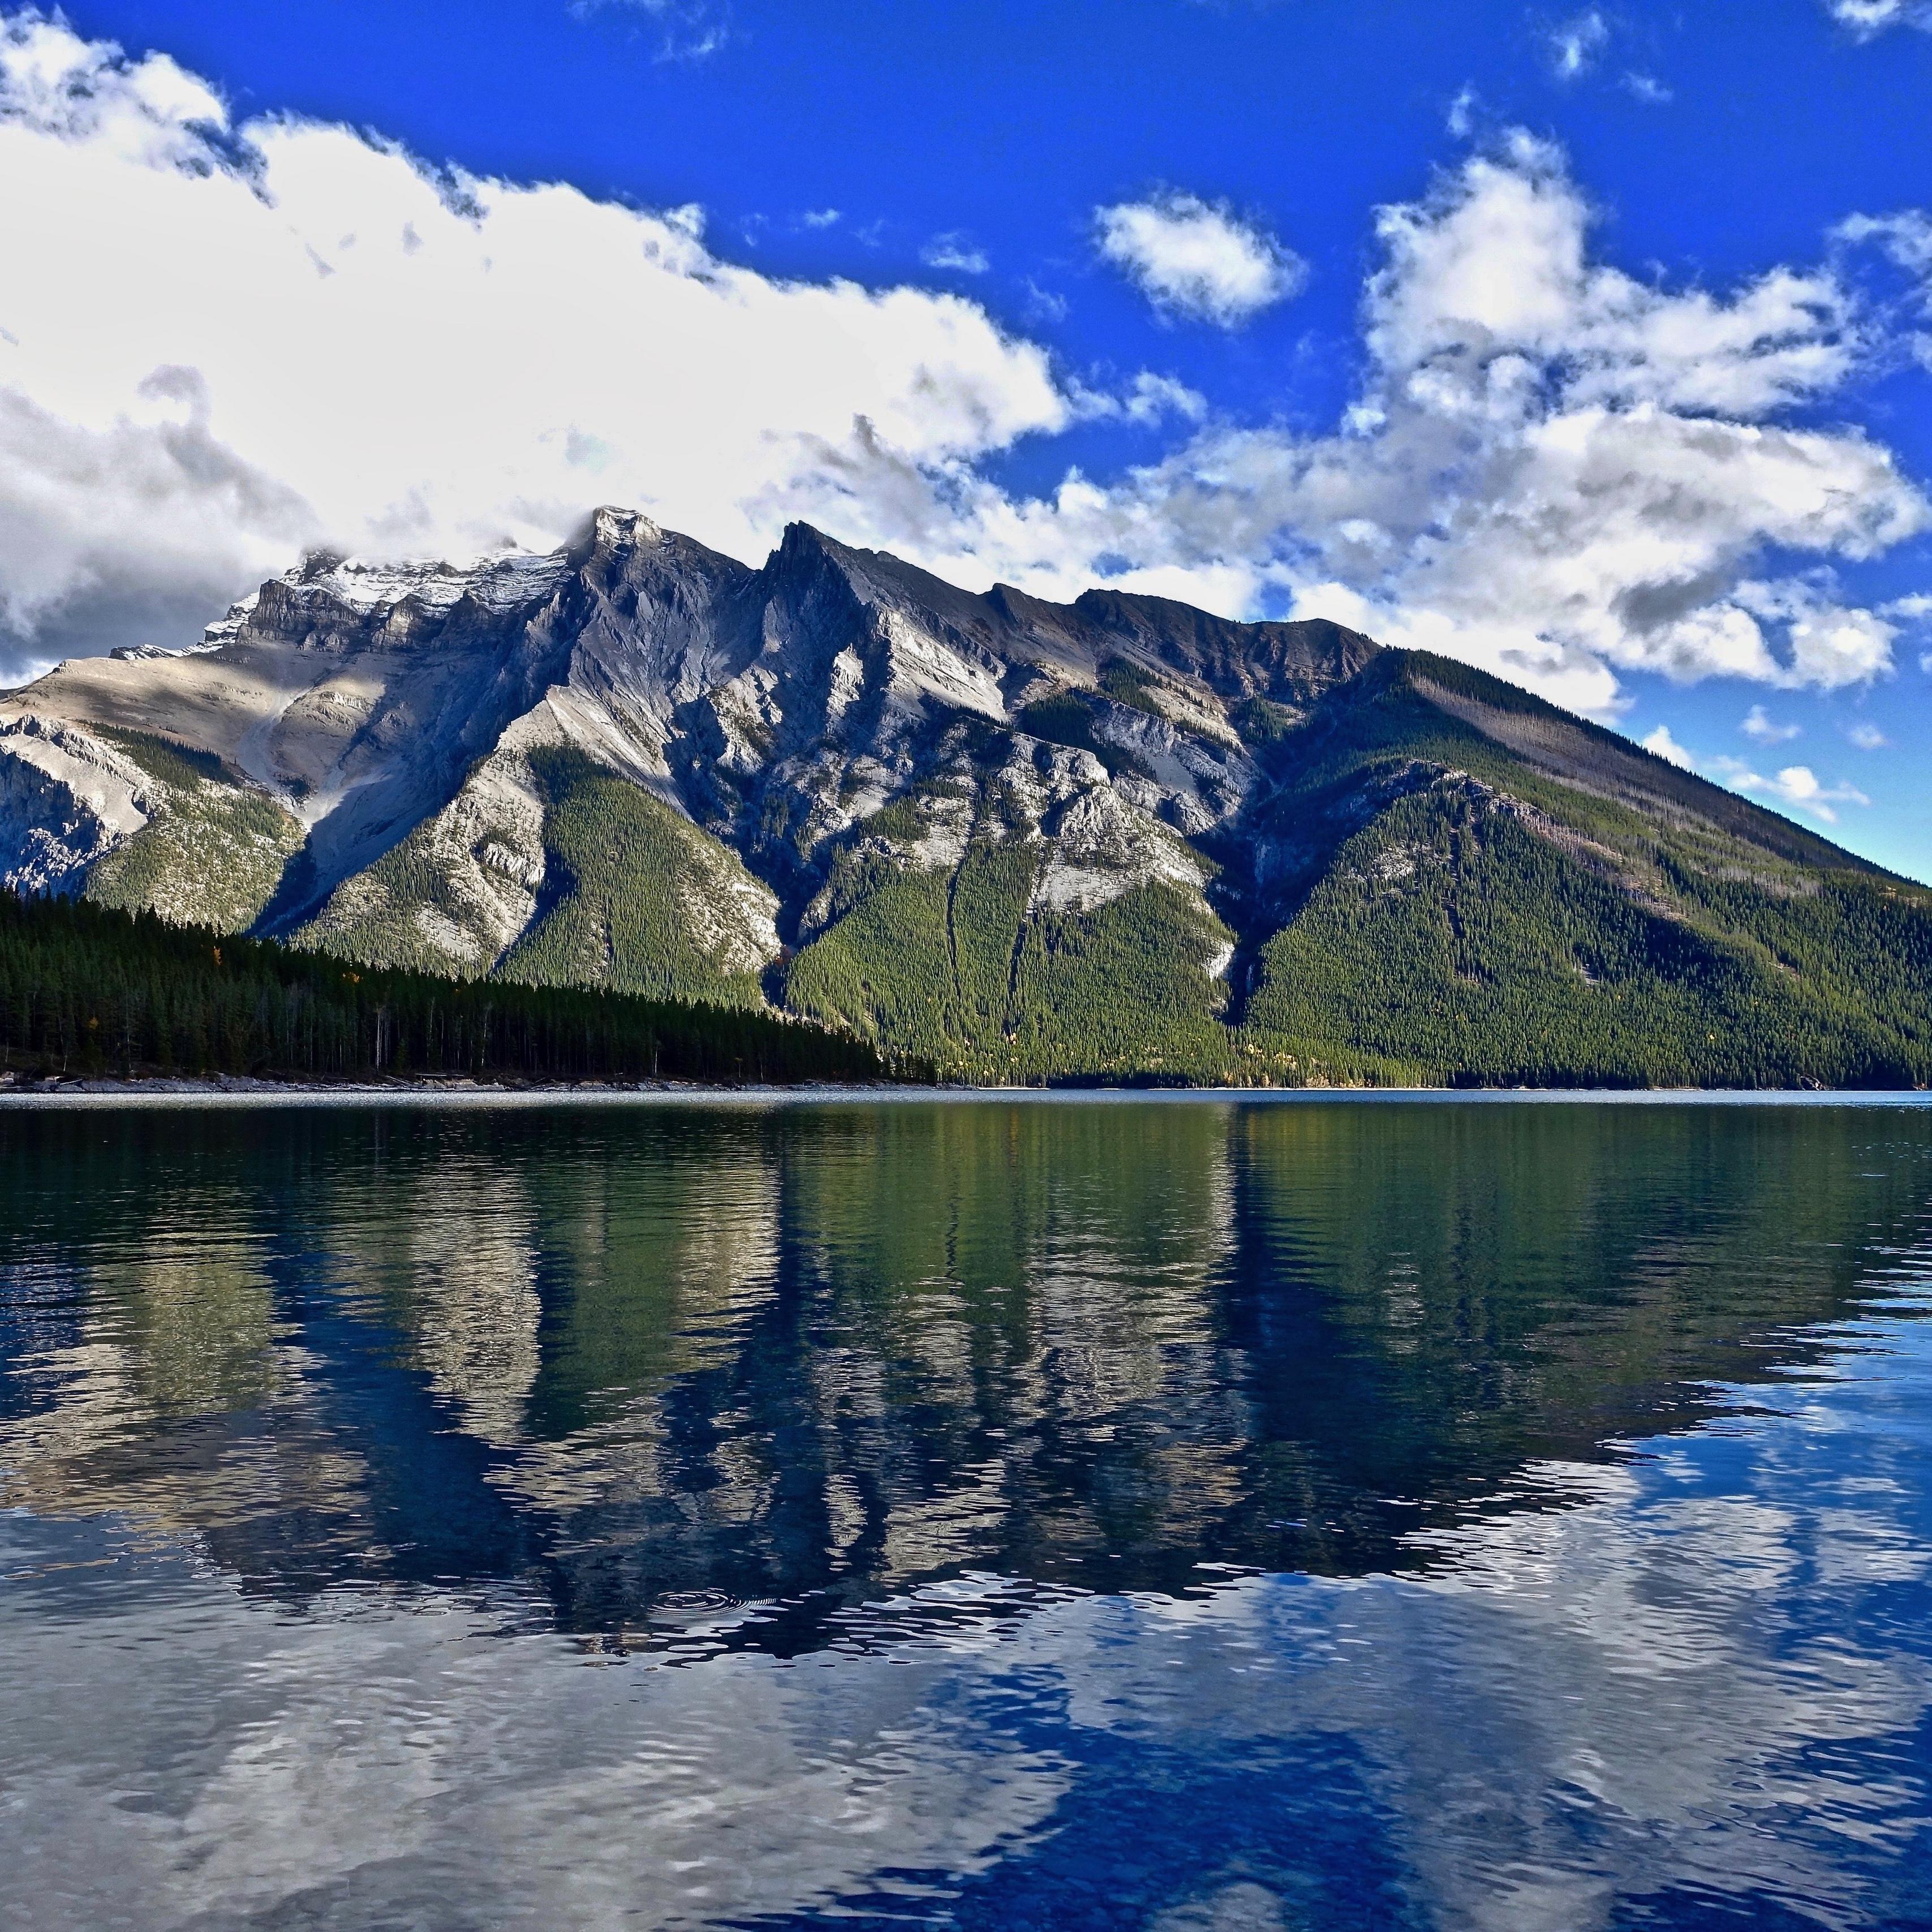 Download wallpaper 3415x3415 mountain, lake, reflection ipad